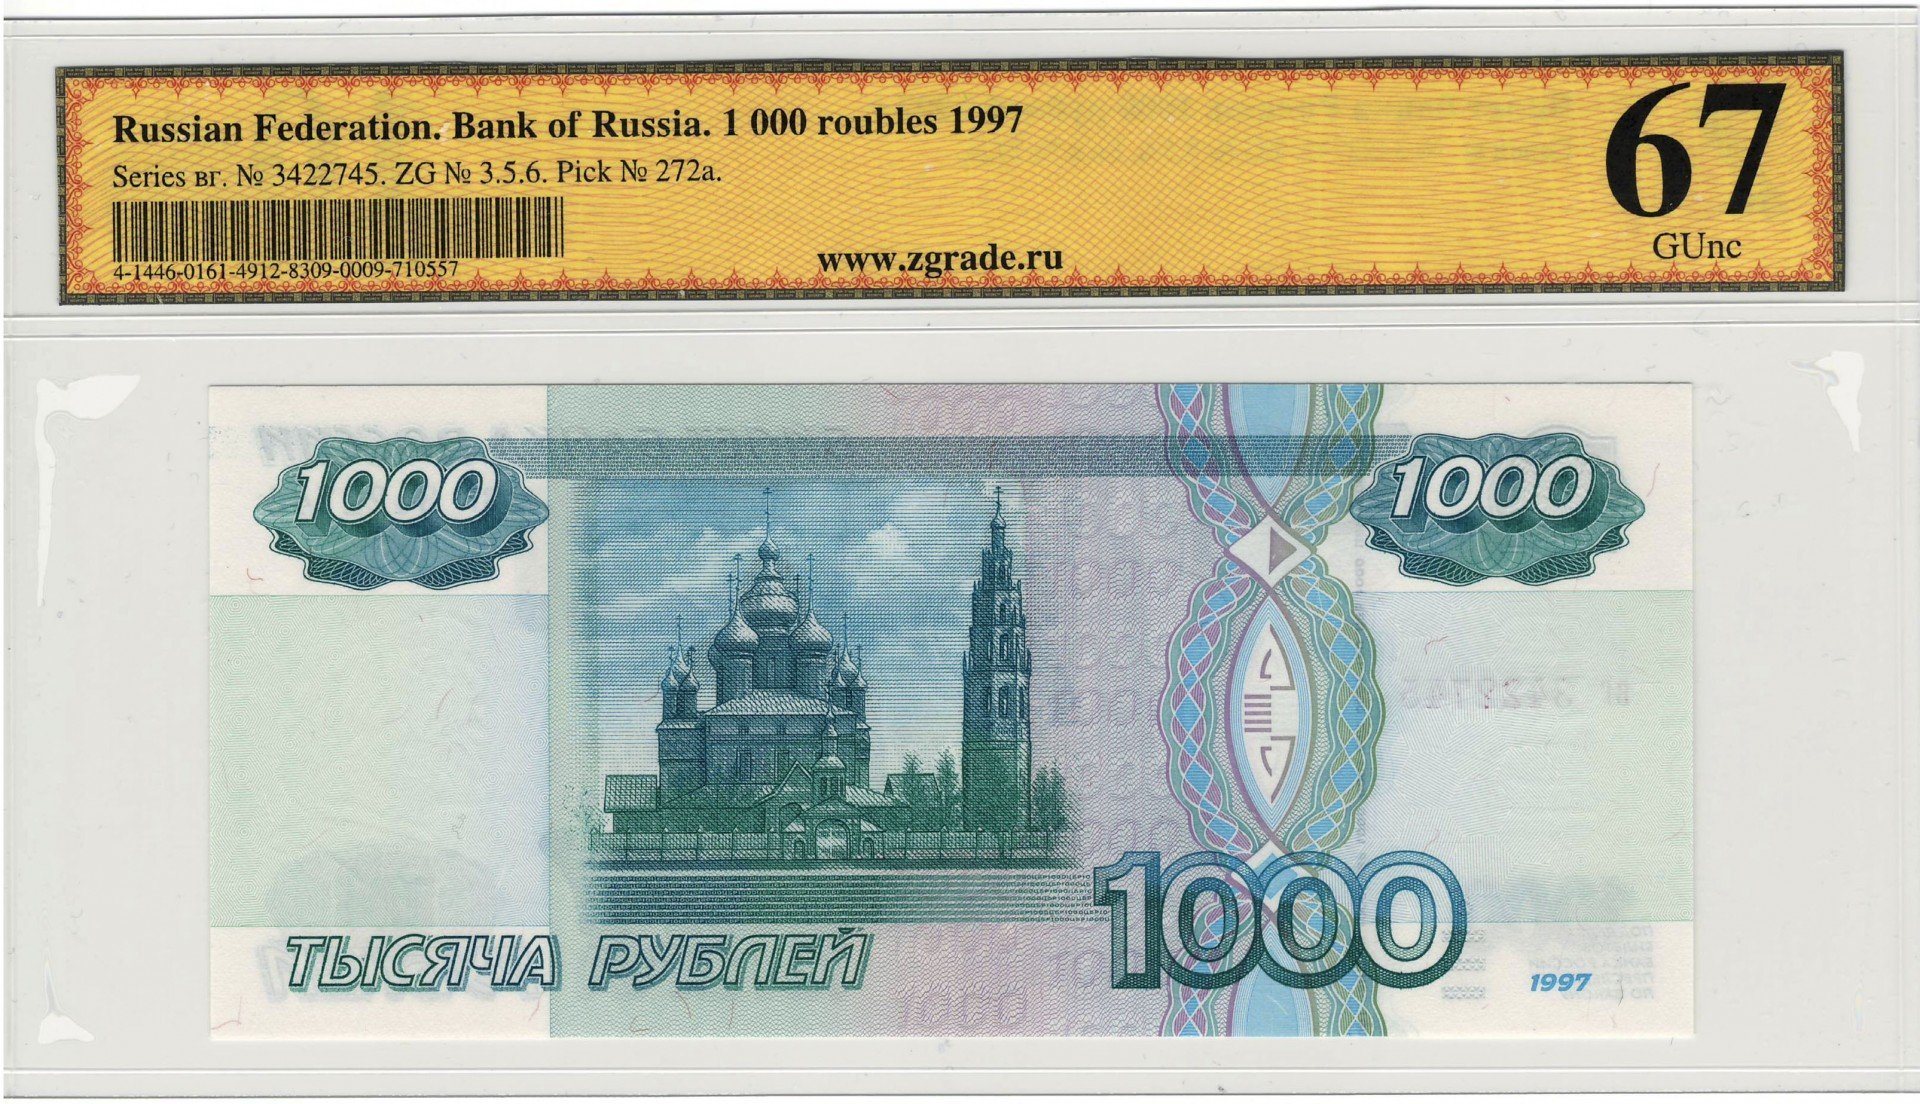 1000 рублей 2004. 1000 Рублей 1997 без модификации. 1000 Рублей 2004 года модификации. 1000 Рублей модификация 2010 года без герба. 1000 Рублей картинка.